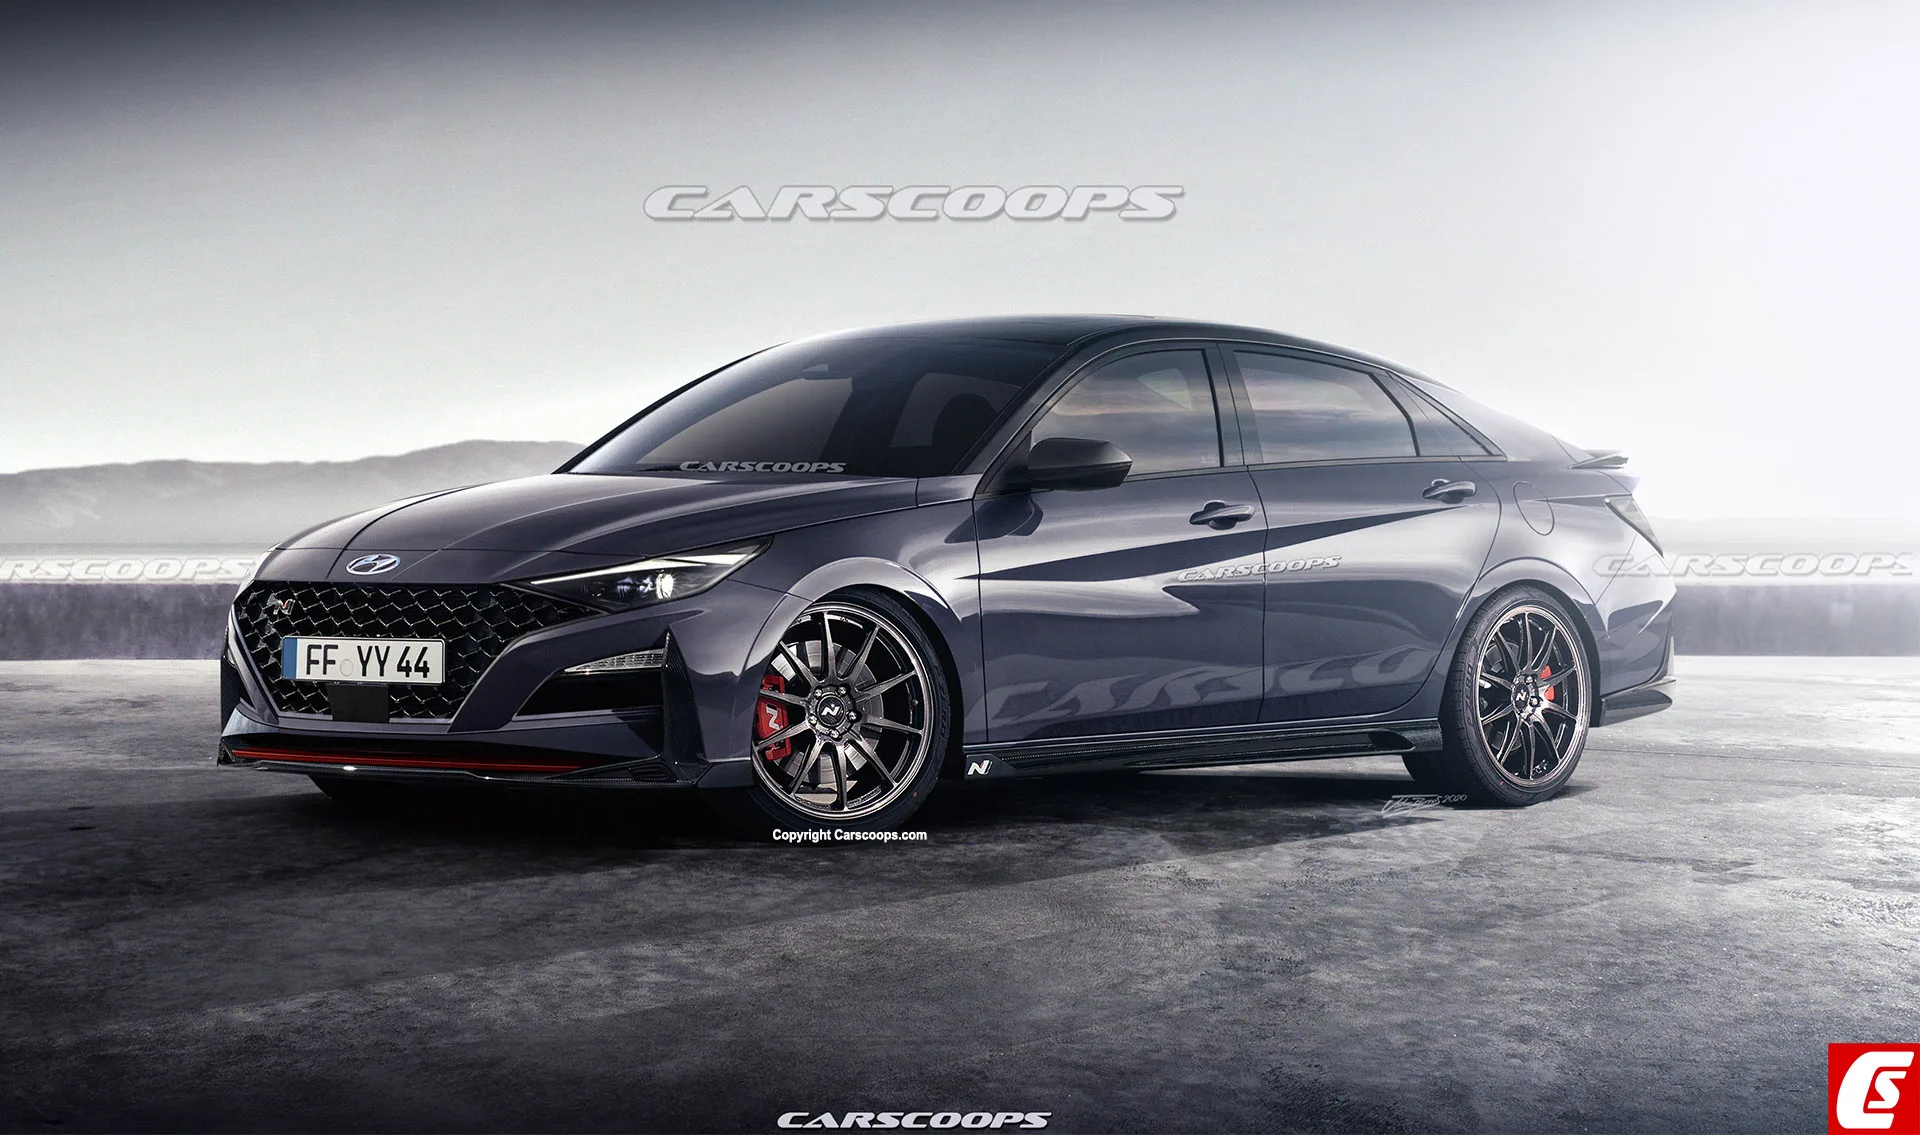 2021-Hyundai-Elantra-N-Carscoops-10.jpg.webp